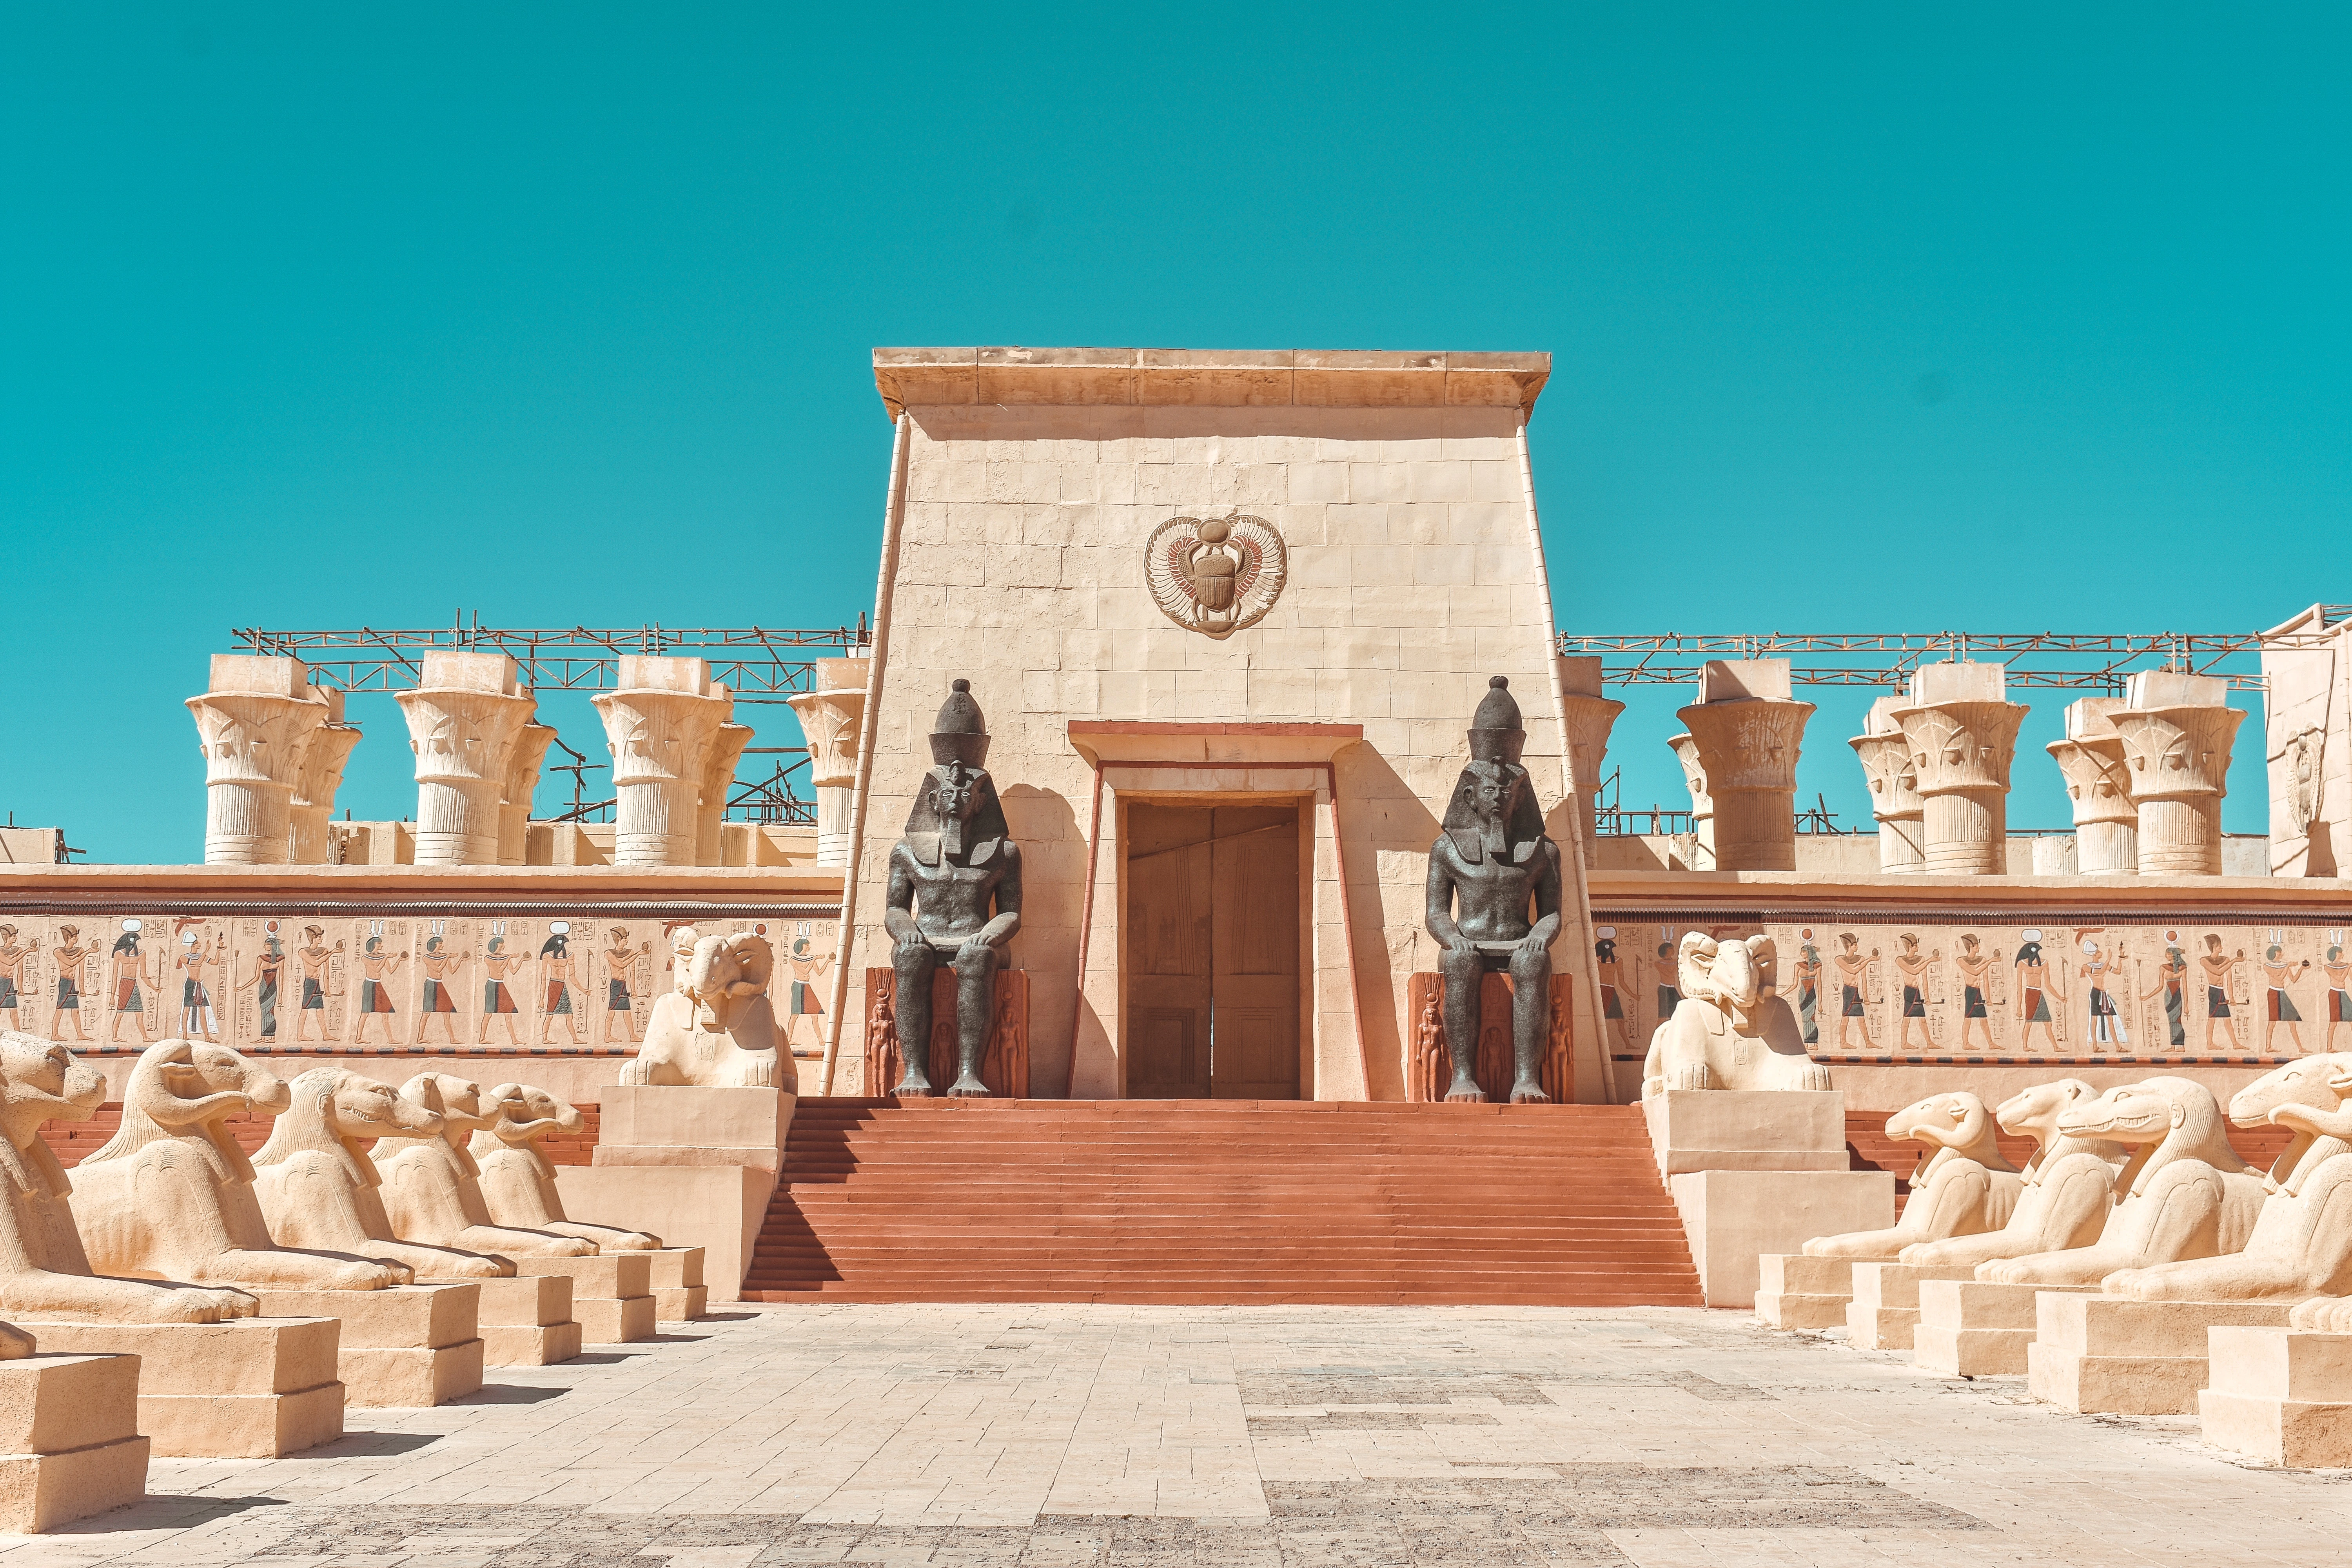 THE EGYPTIAN IRY-EN-AKHET FALSE DOOR